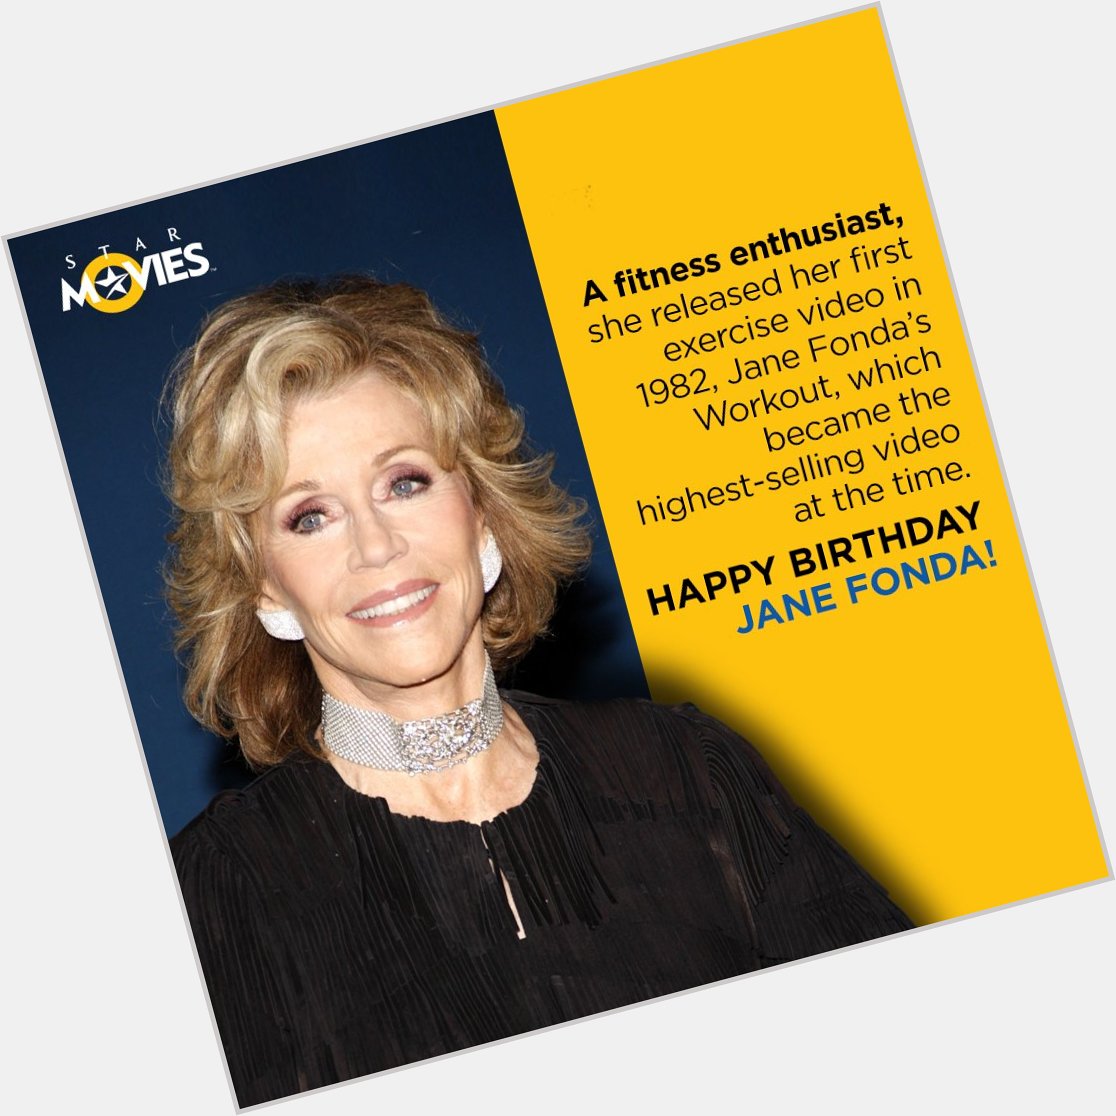 We are extremely Fonda this ravishing actress who s celebrating her birthday today! Happy birthday Jane Fonda! 